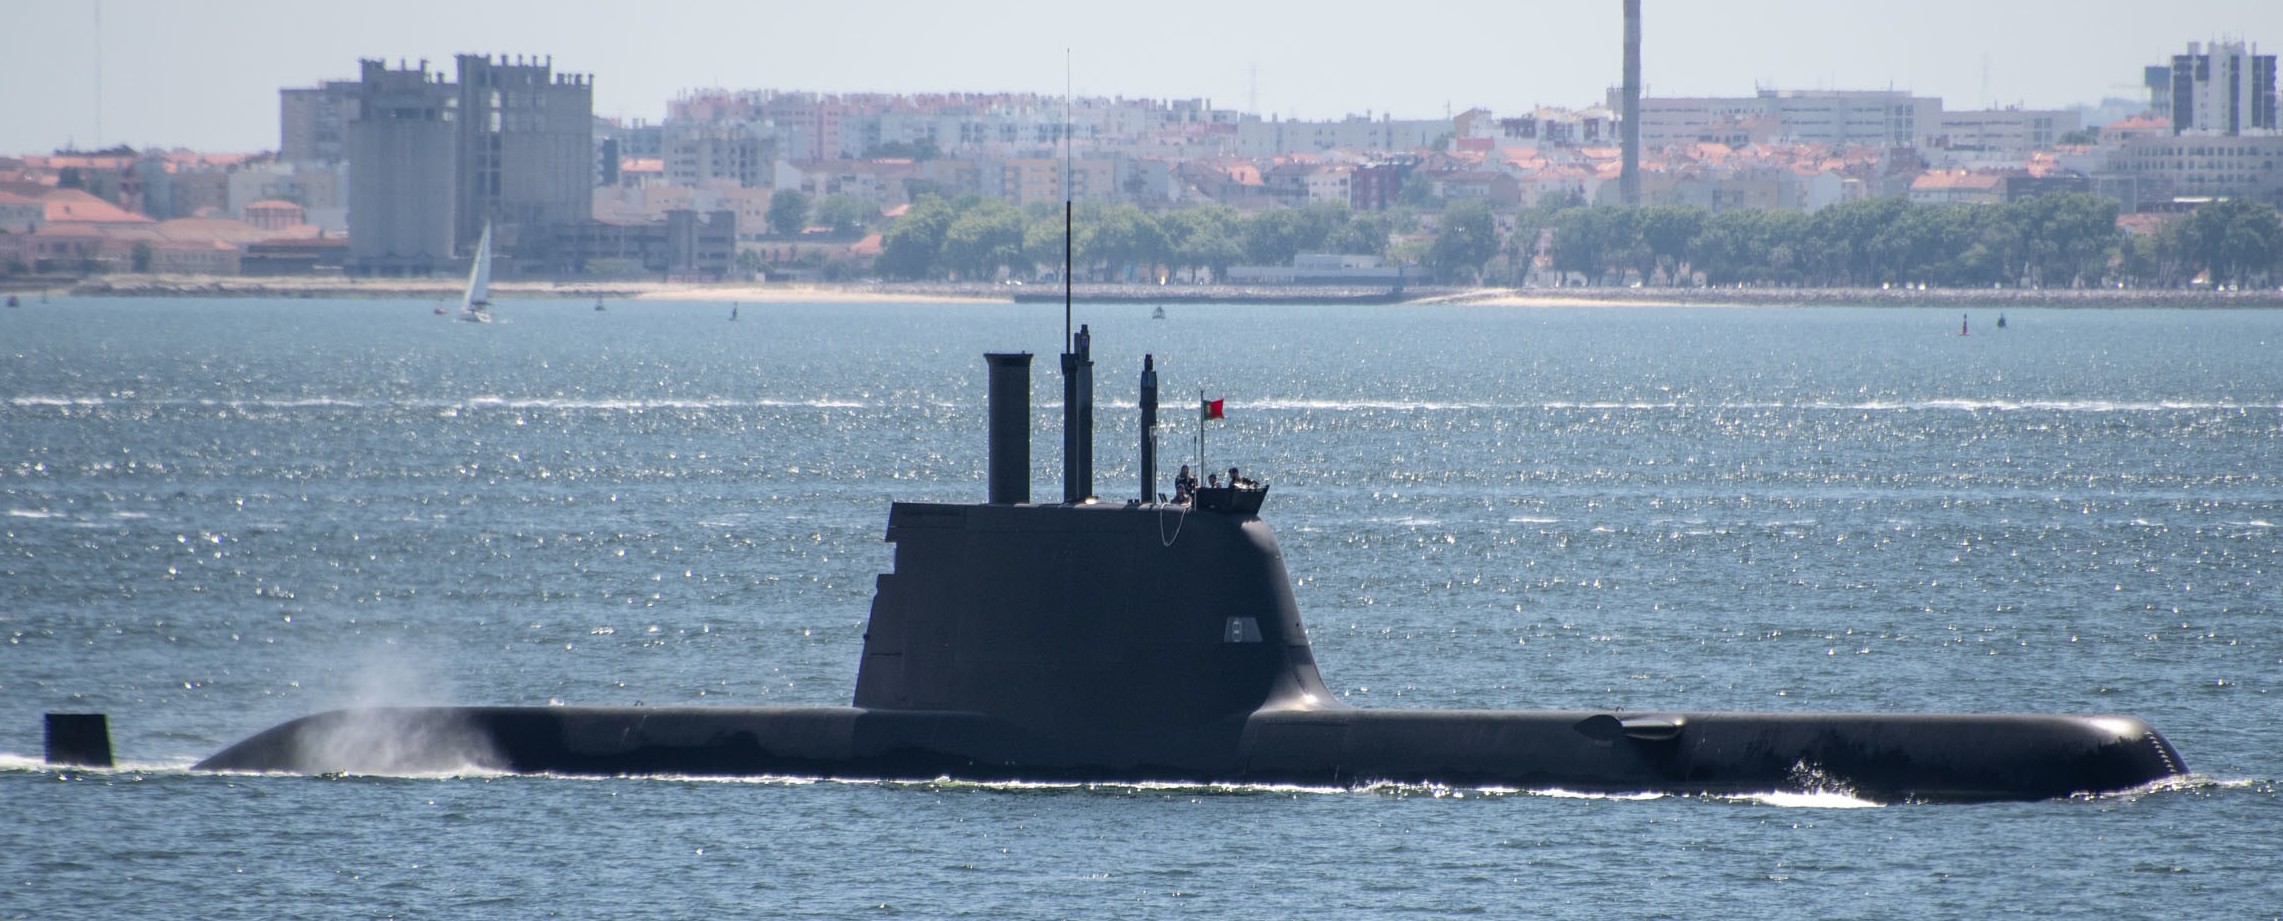 s-160 nrp tridente class type 209pn attack submarine ssk aip portuguese navy marinha 07